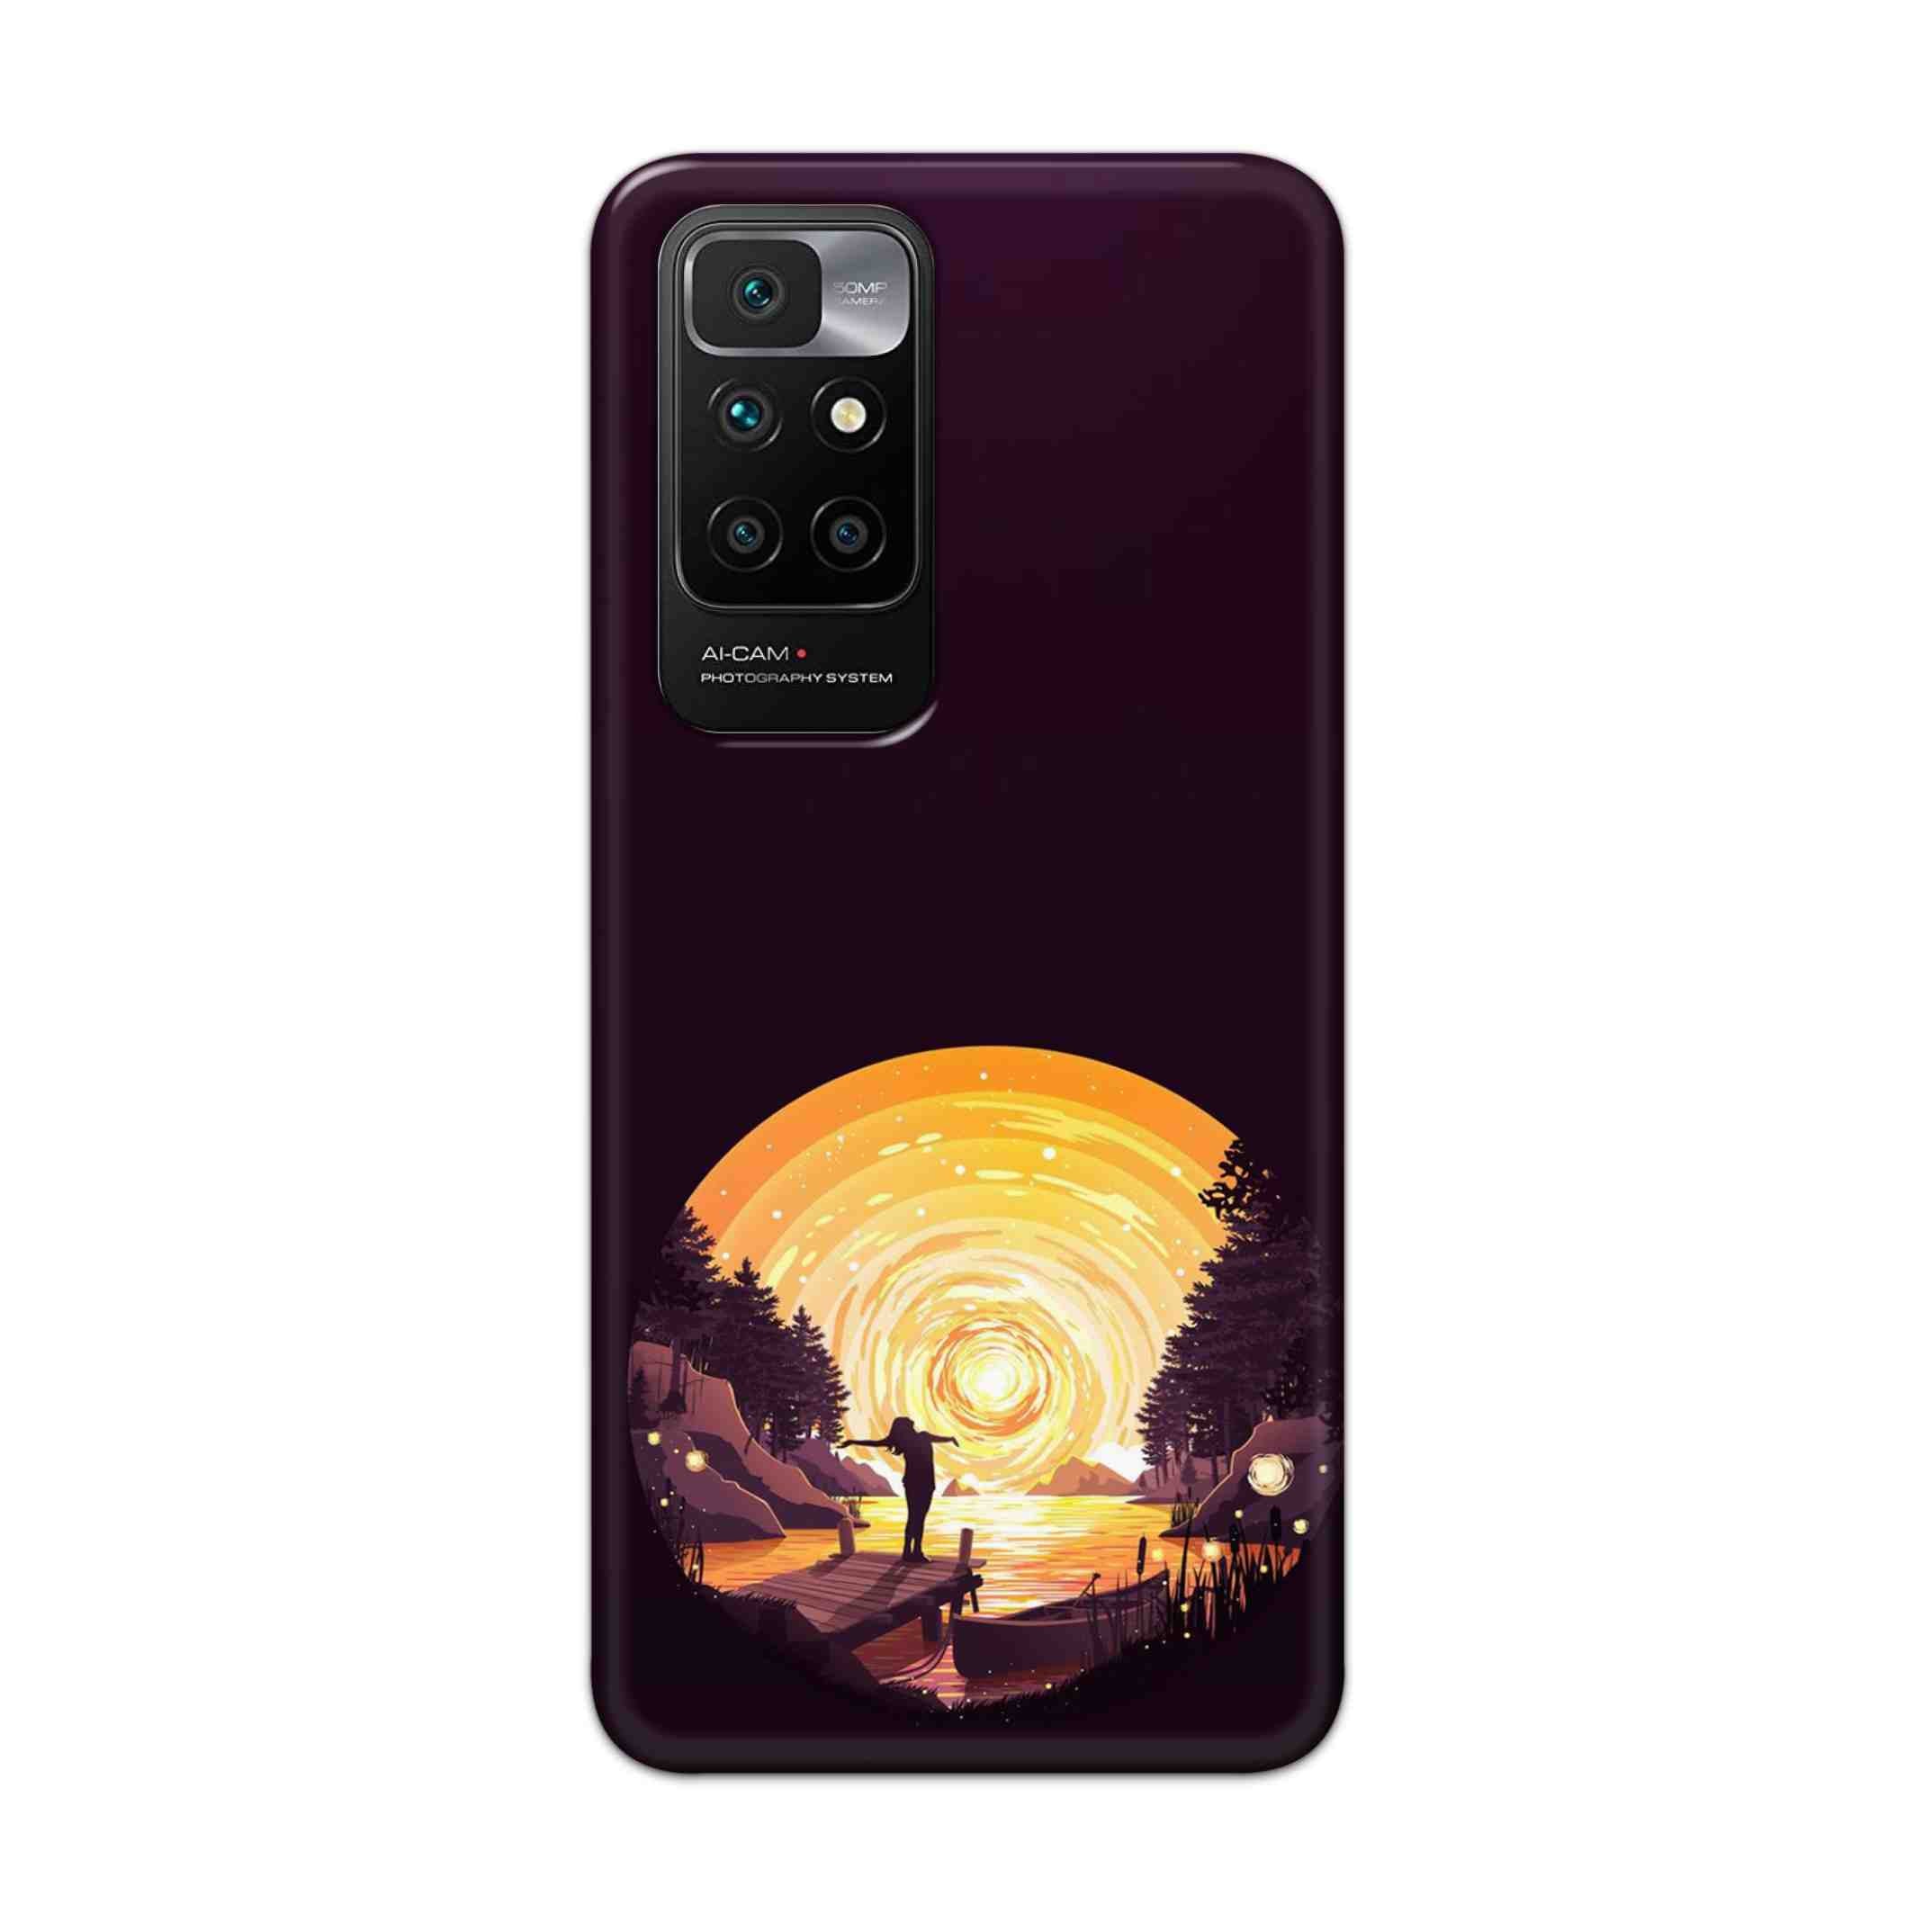 Buy Night Sunrise Hard Back Mobile Phone Case Cover For Redmi 10 Prime Online